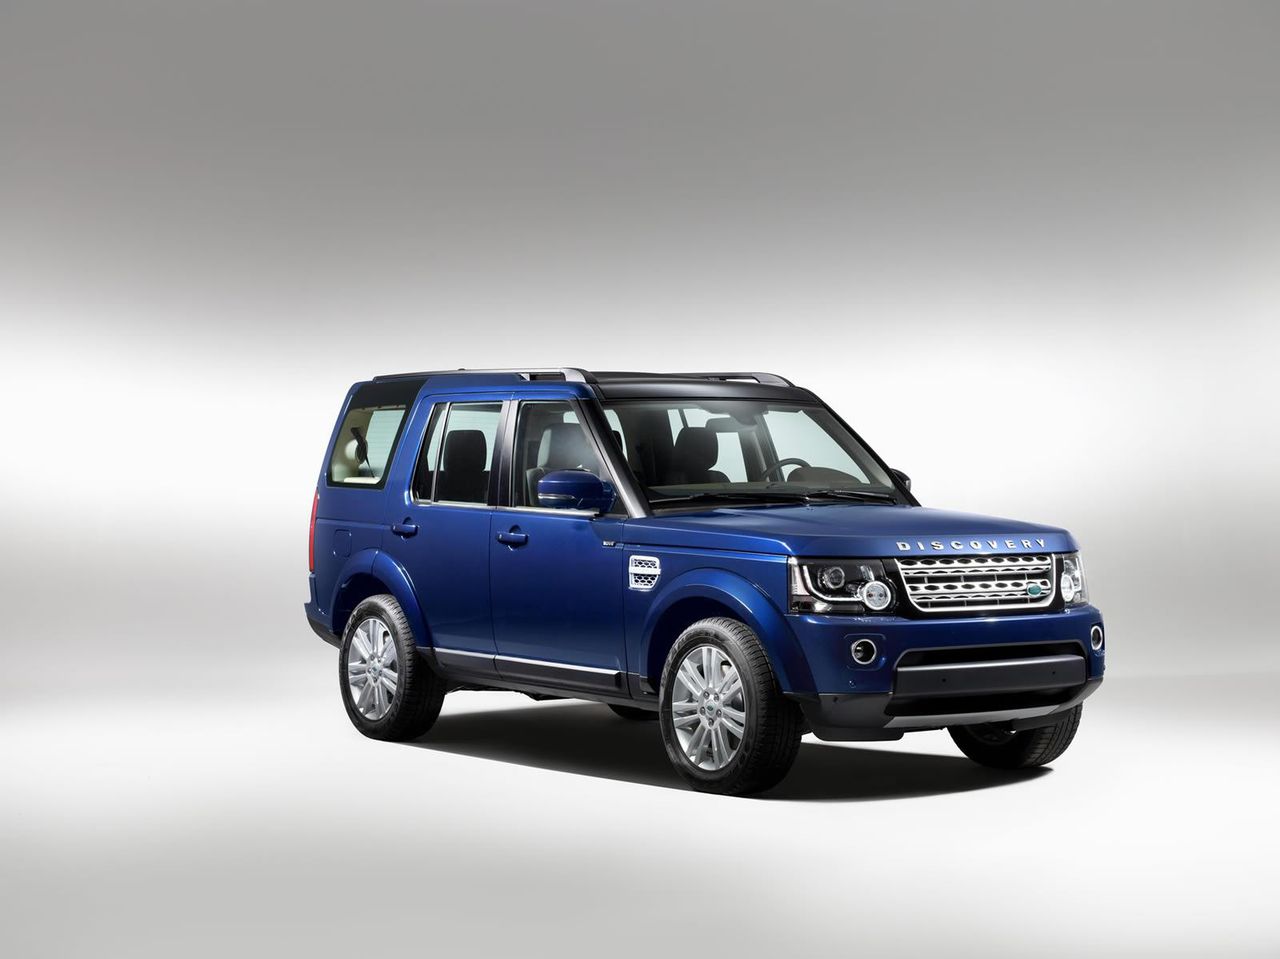 Land Rover Discovery przechodzi facelifting